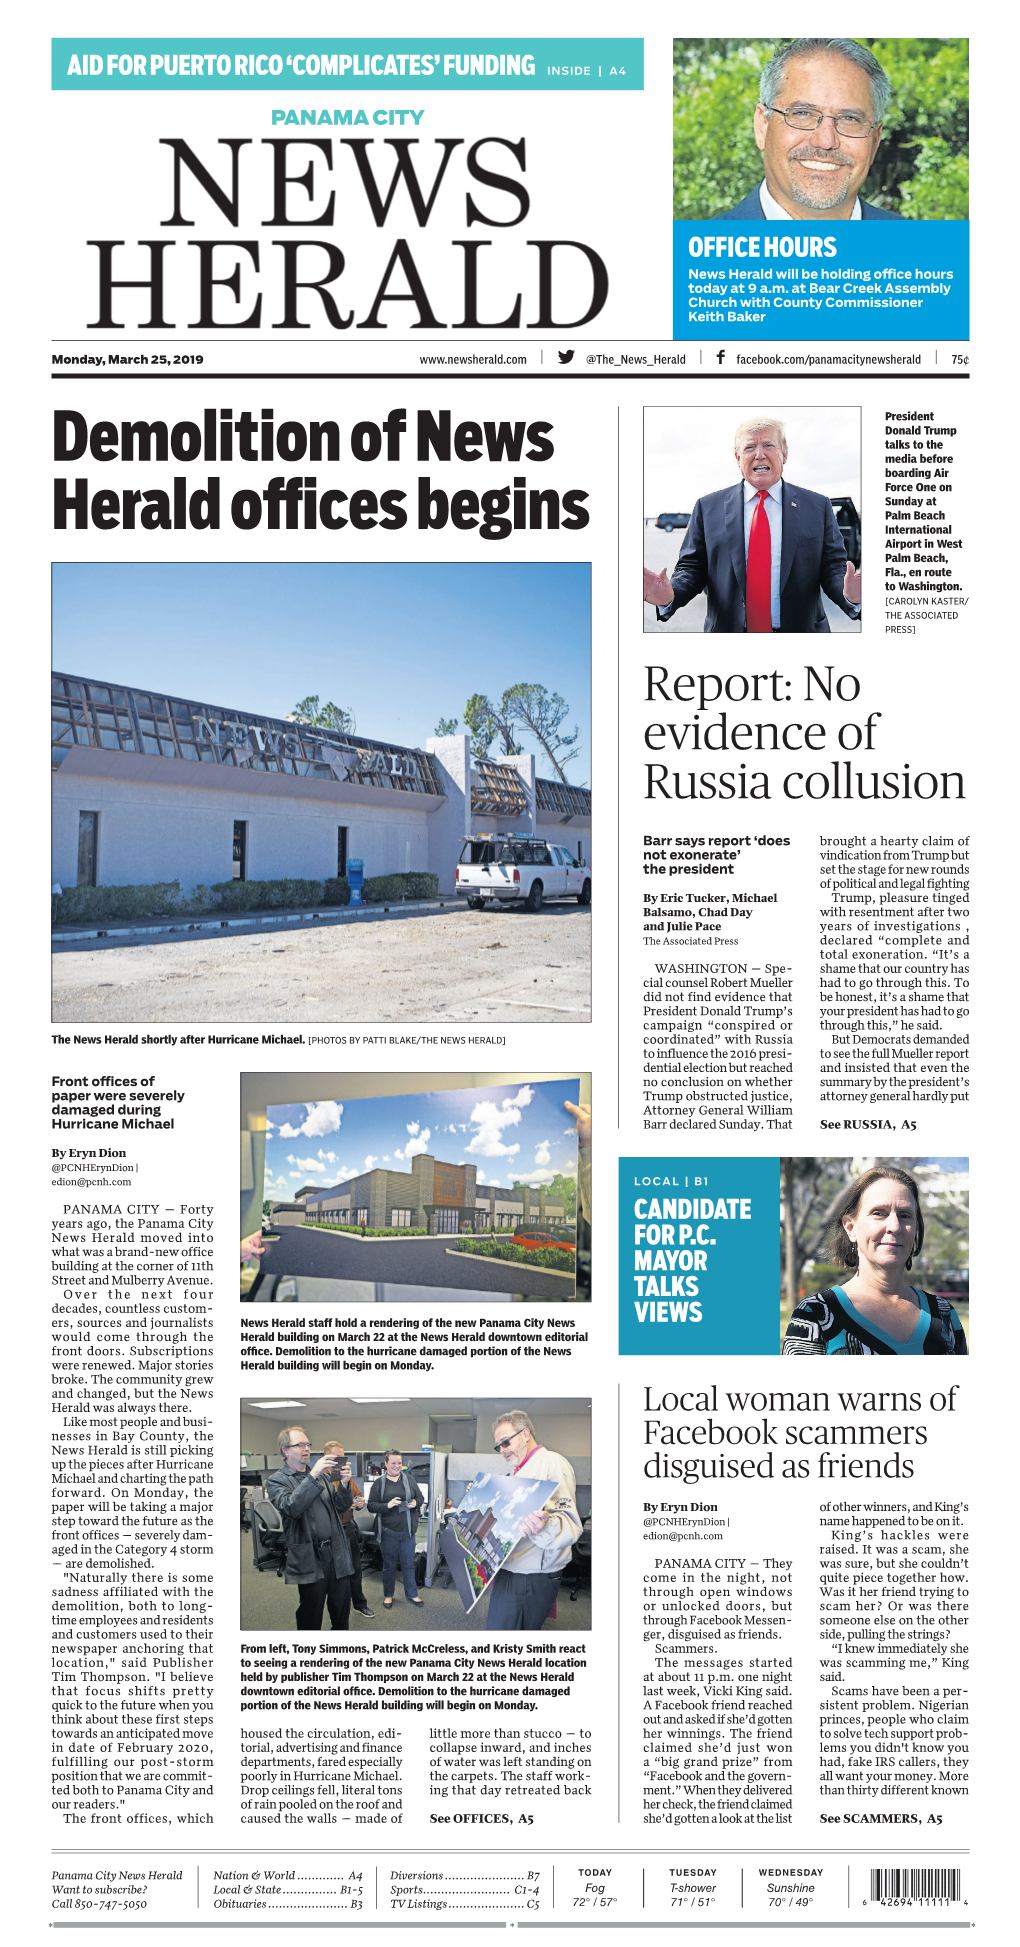 Demolition of News Herald Offices Begins